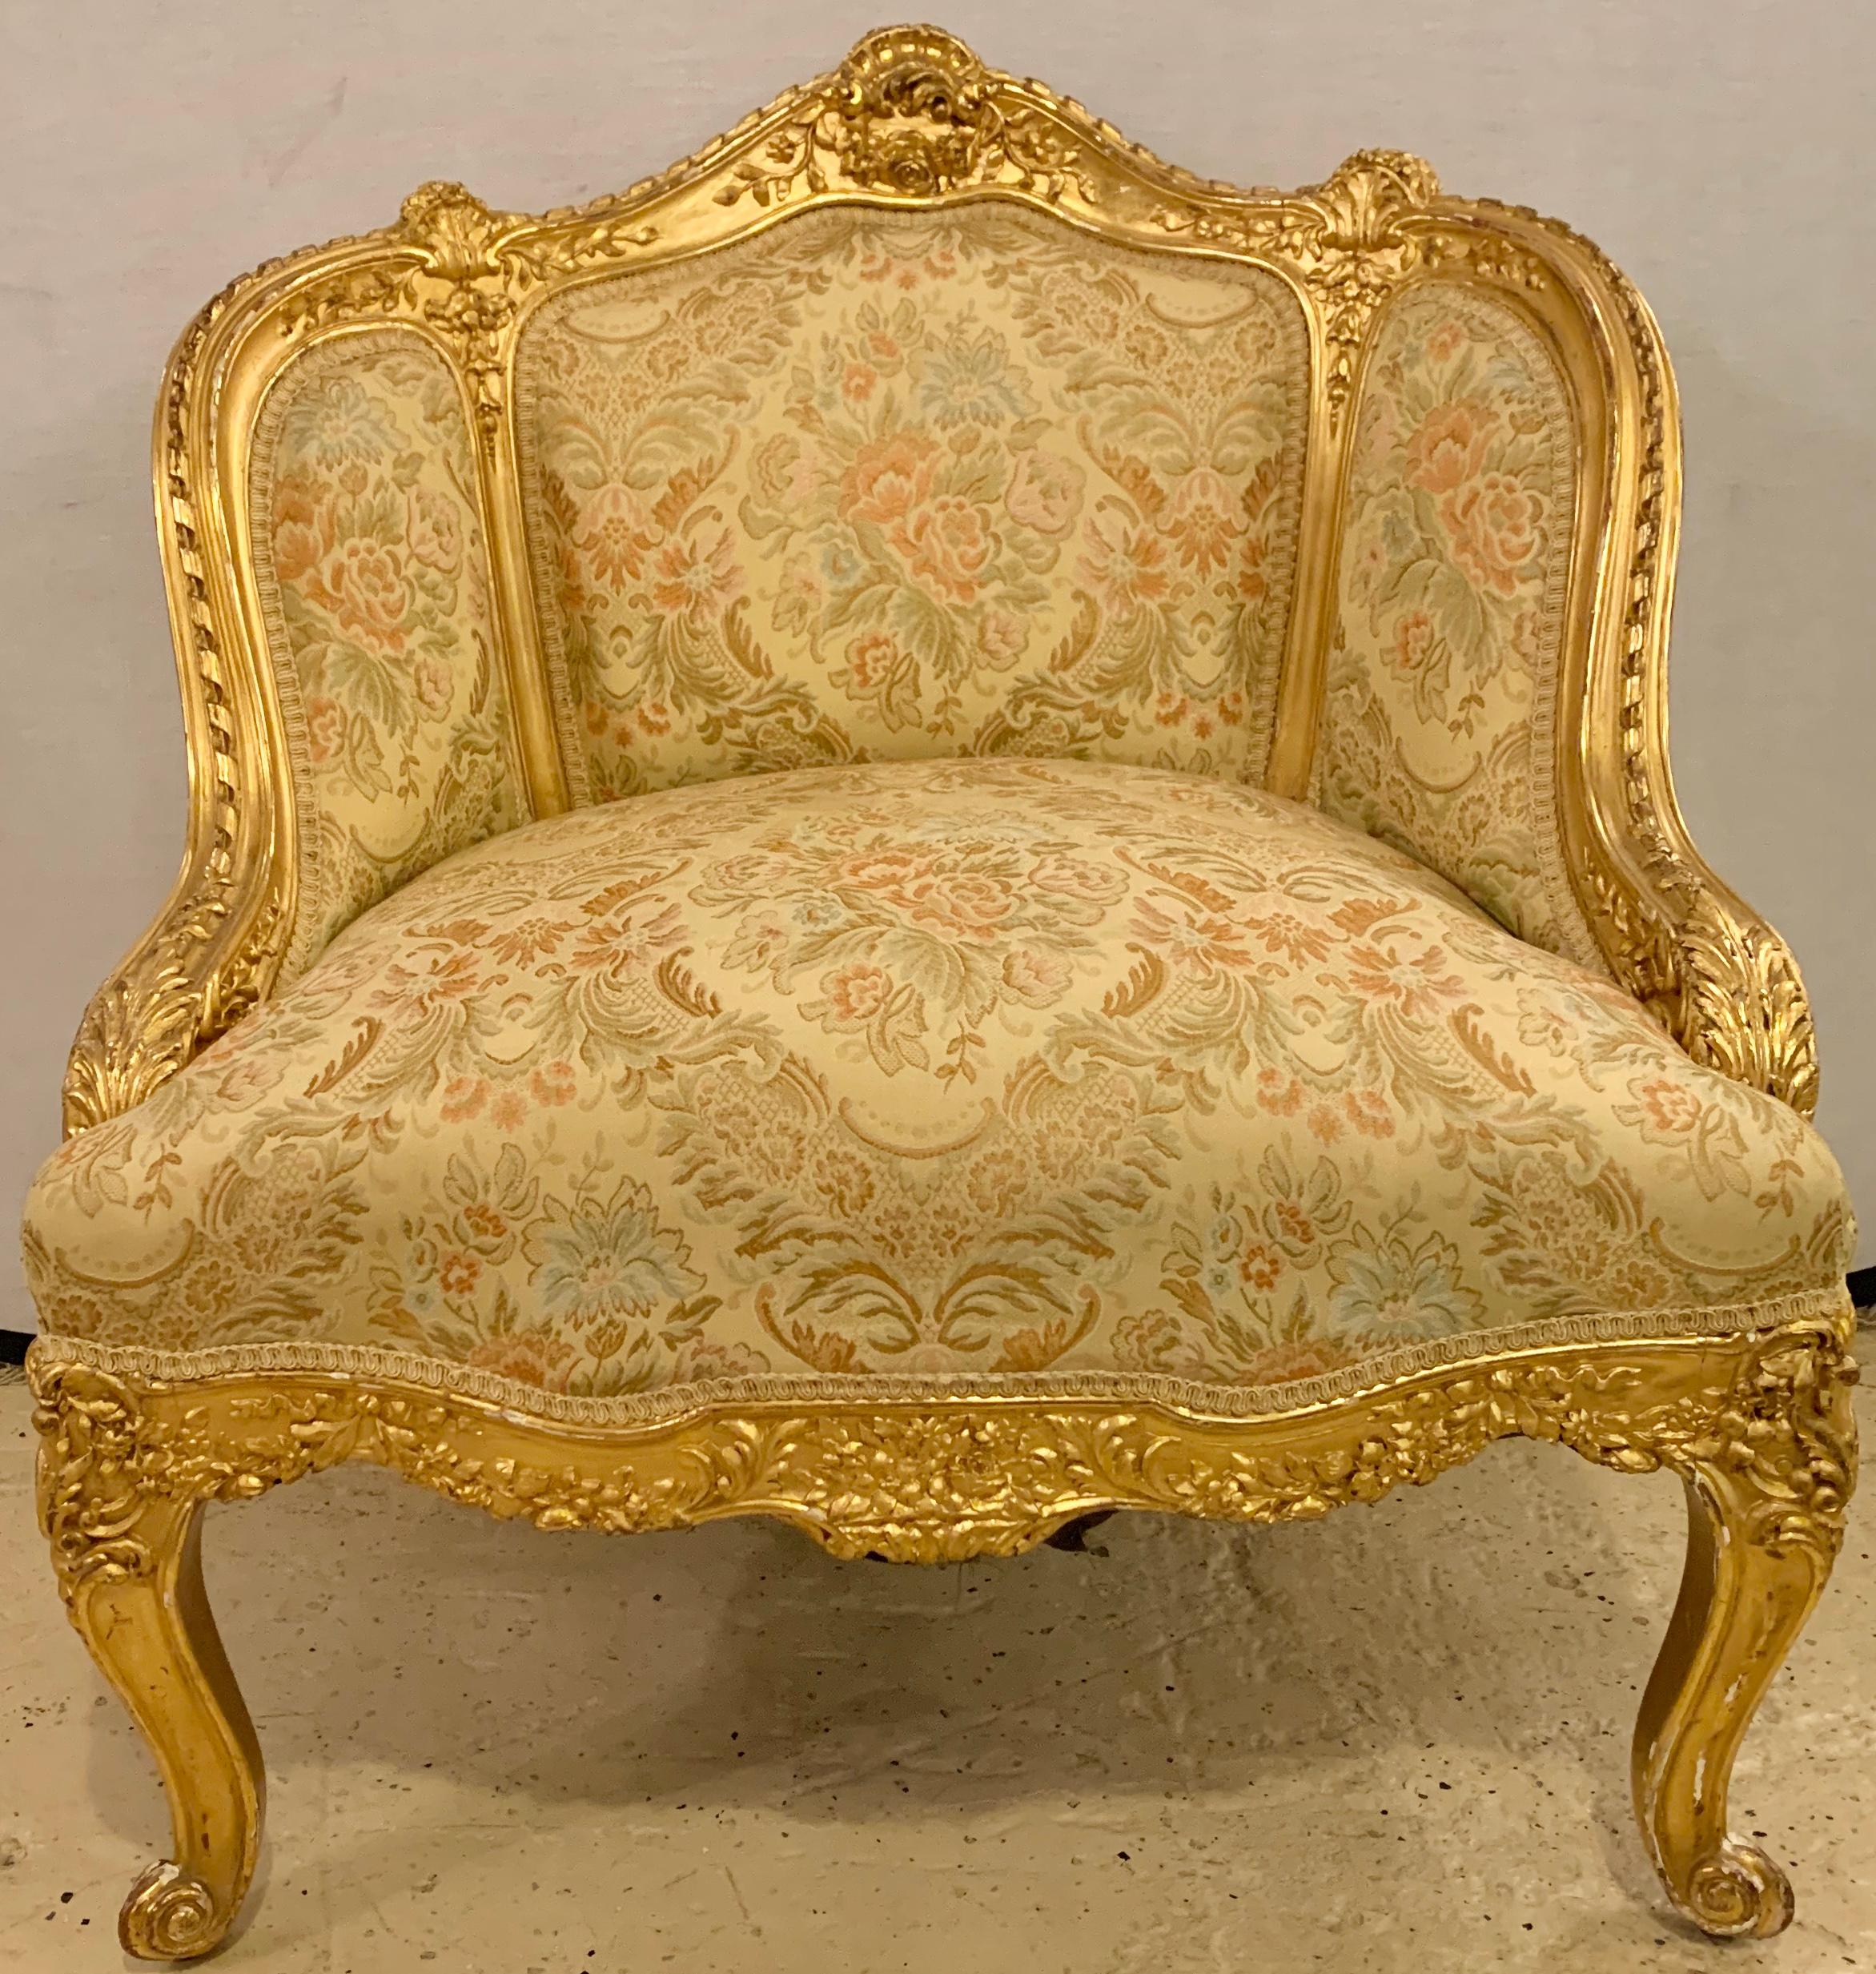 Louis XV style gilt gold armchair or bergere chair having a very fine carved frame.

Greg
EXXX/ZAAX.